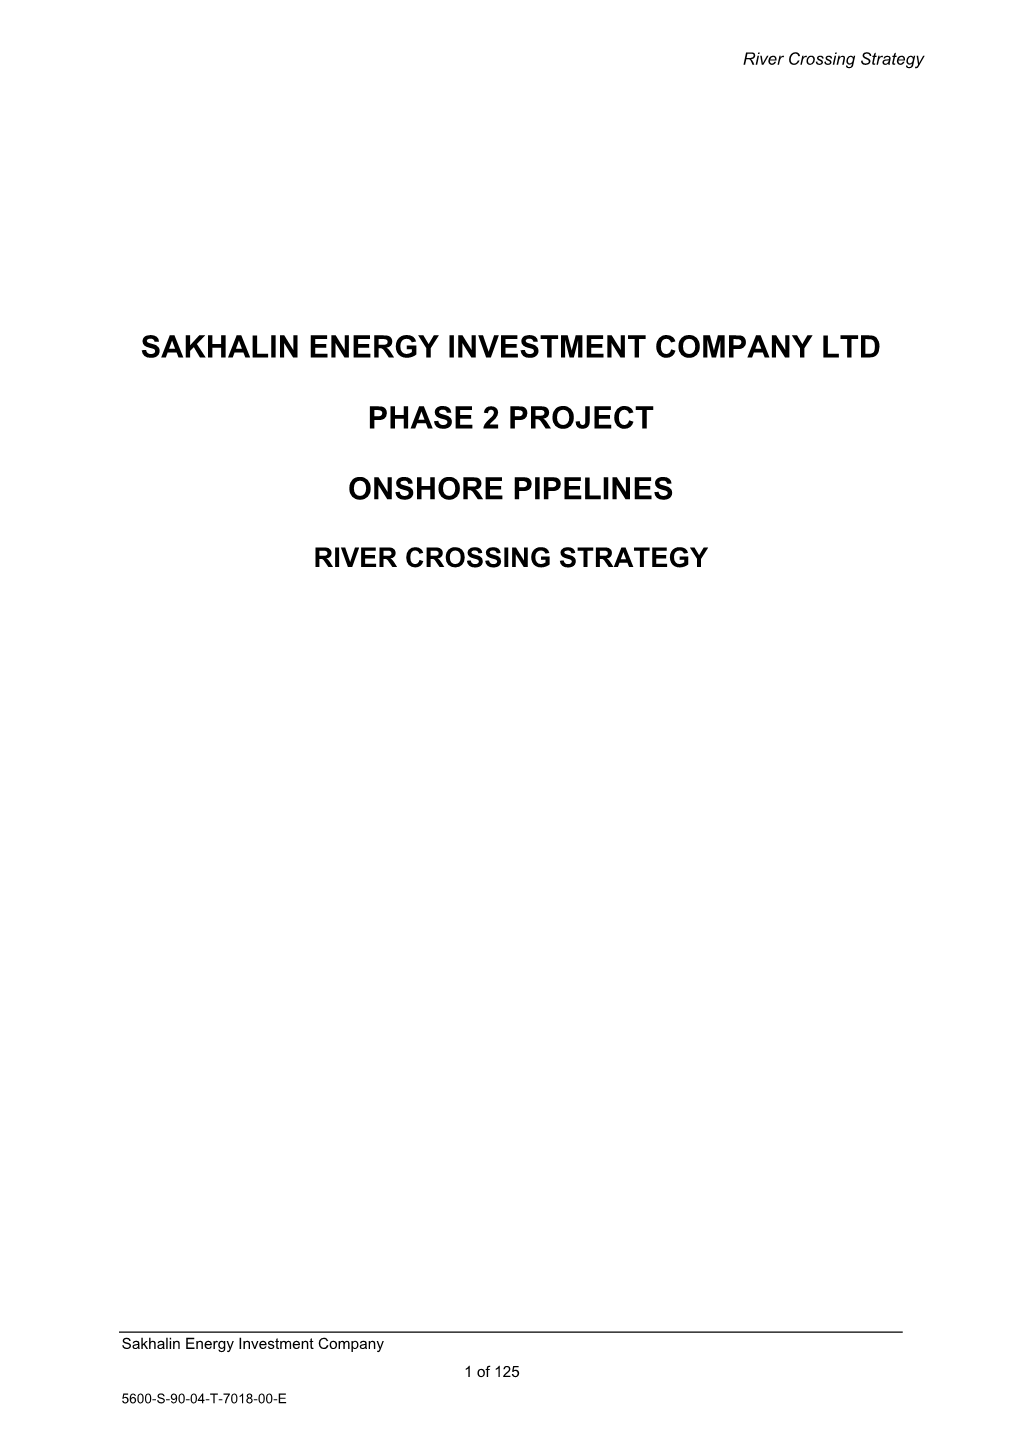 Sakhalin Energy Investment Company Ltd Phase 2